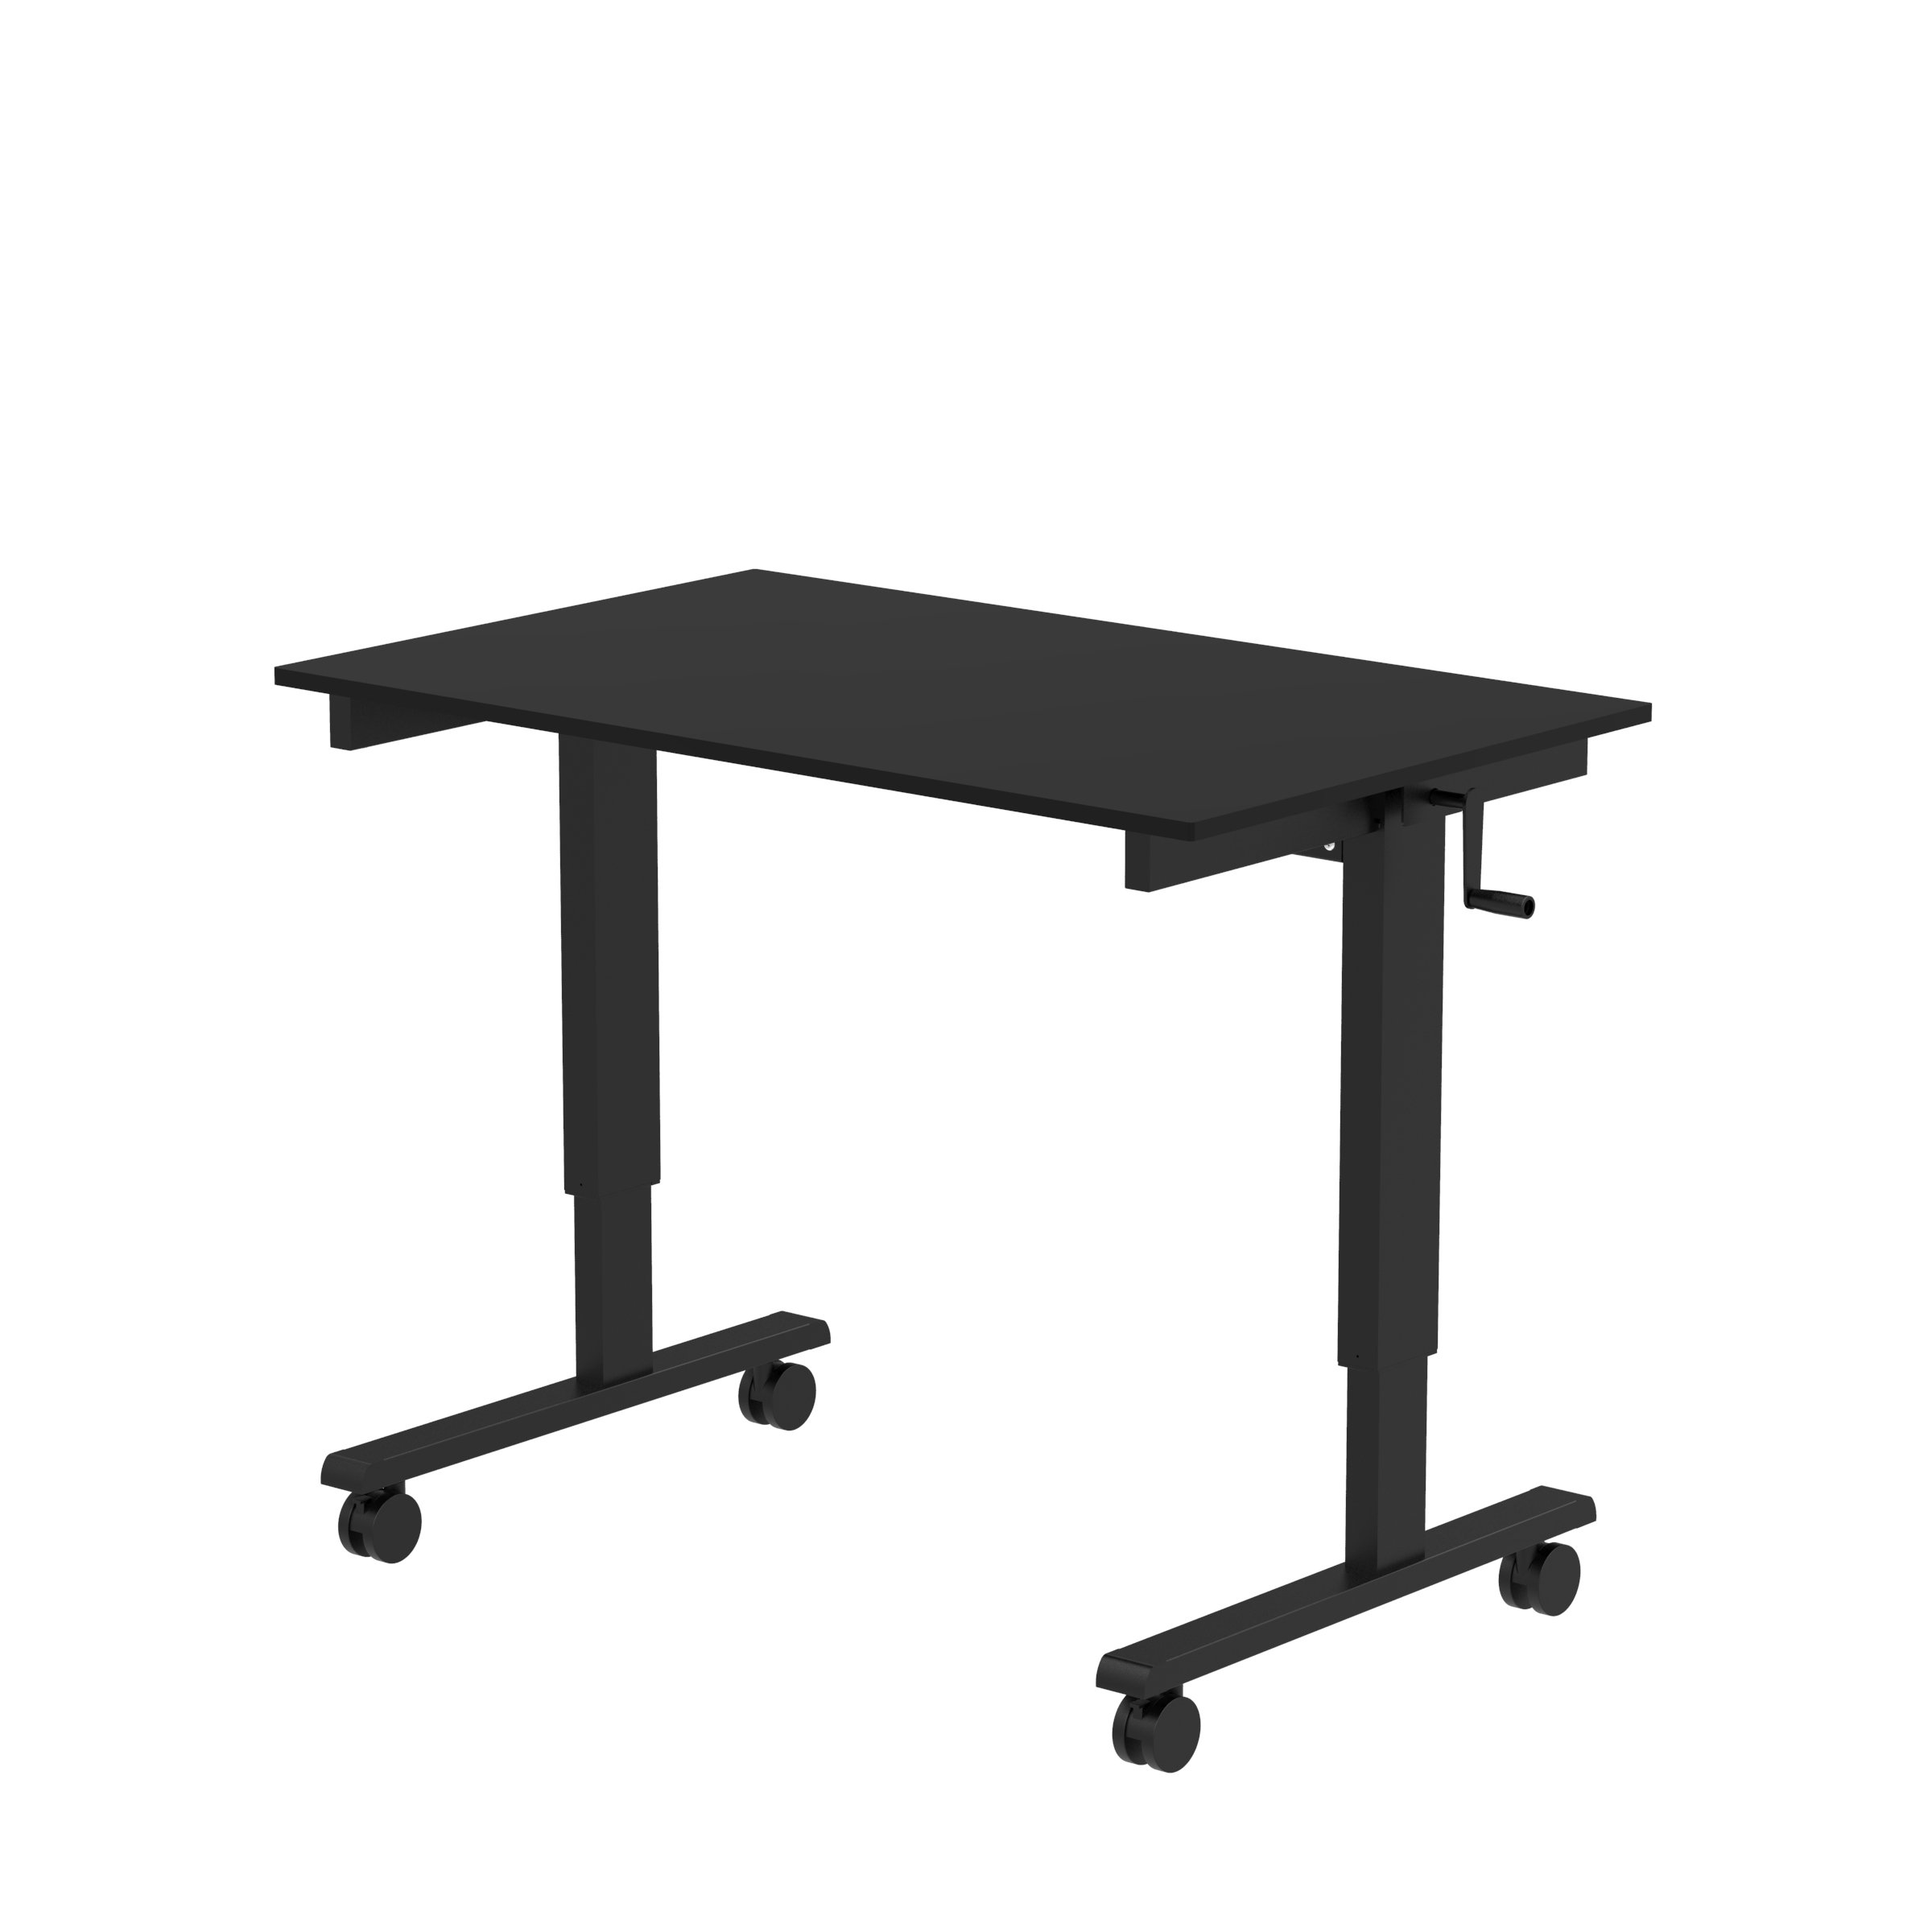 Symple Stuff Zeledon Adjustable Standing Desk Wayfair